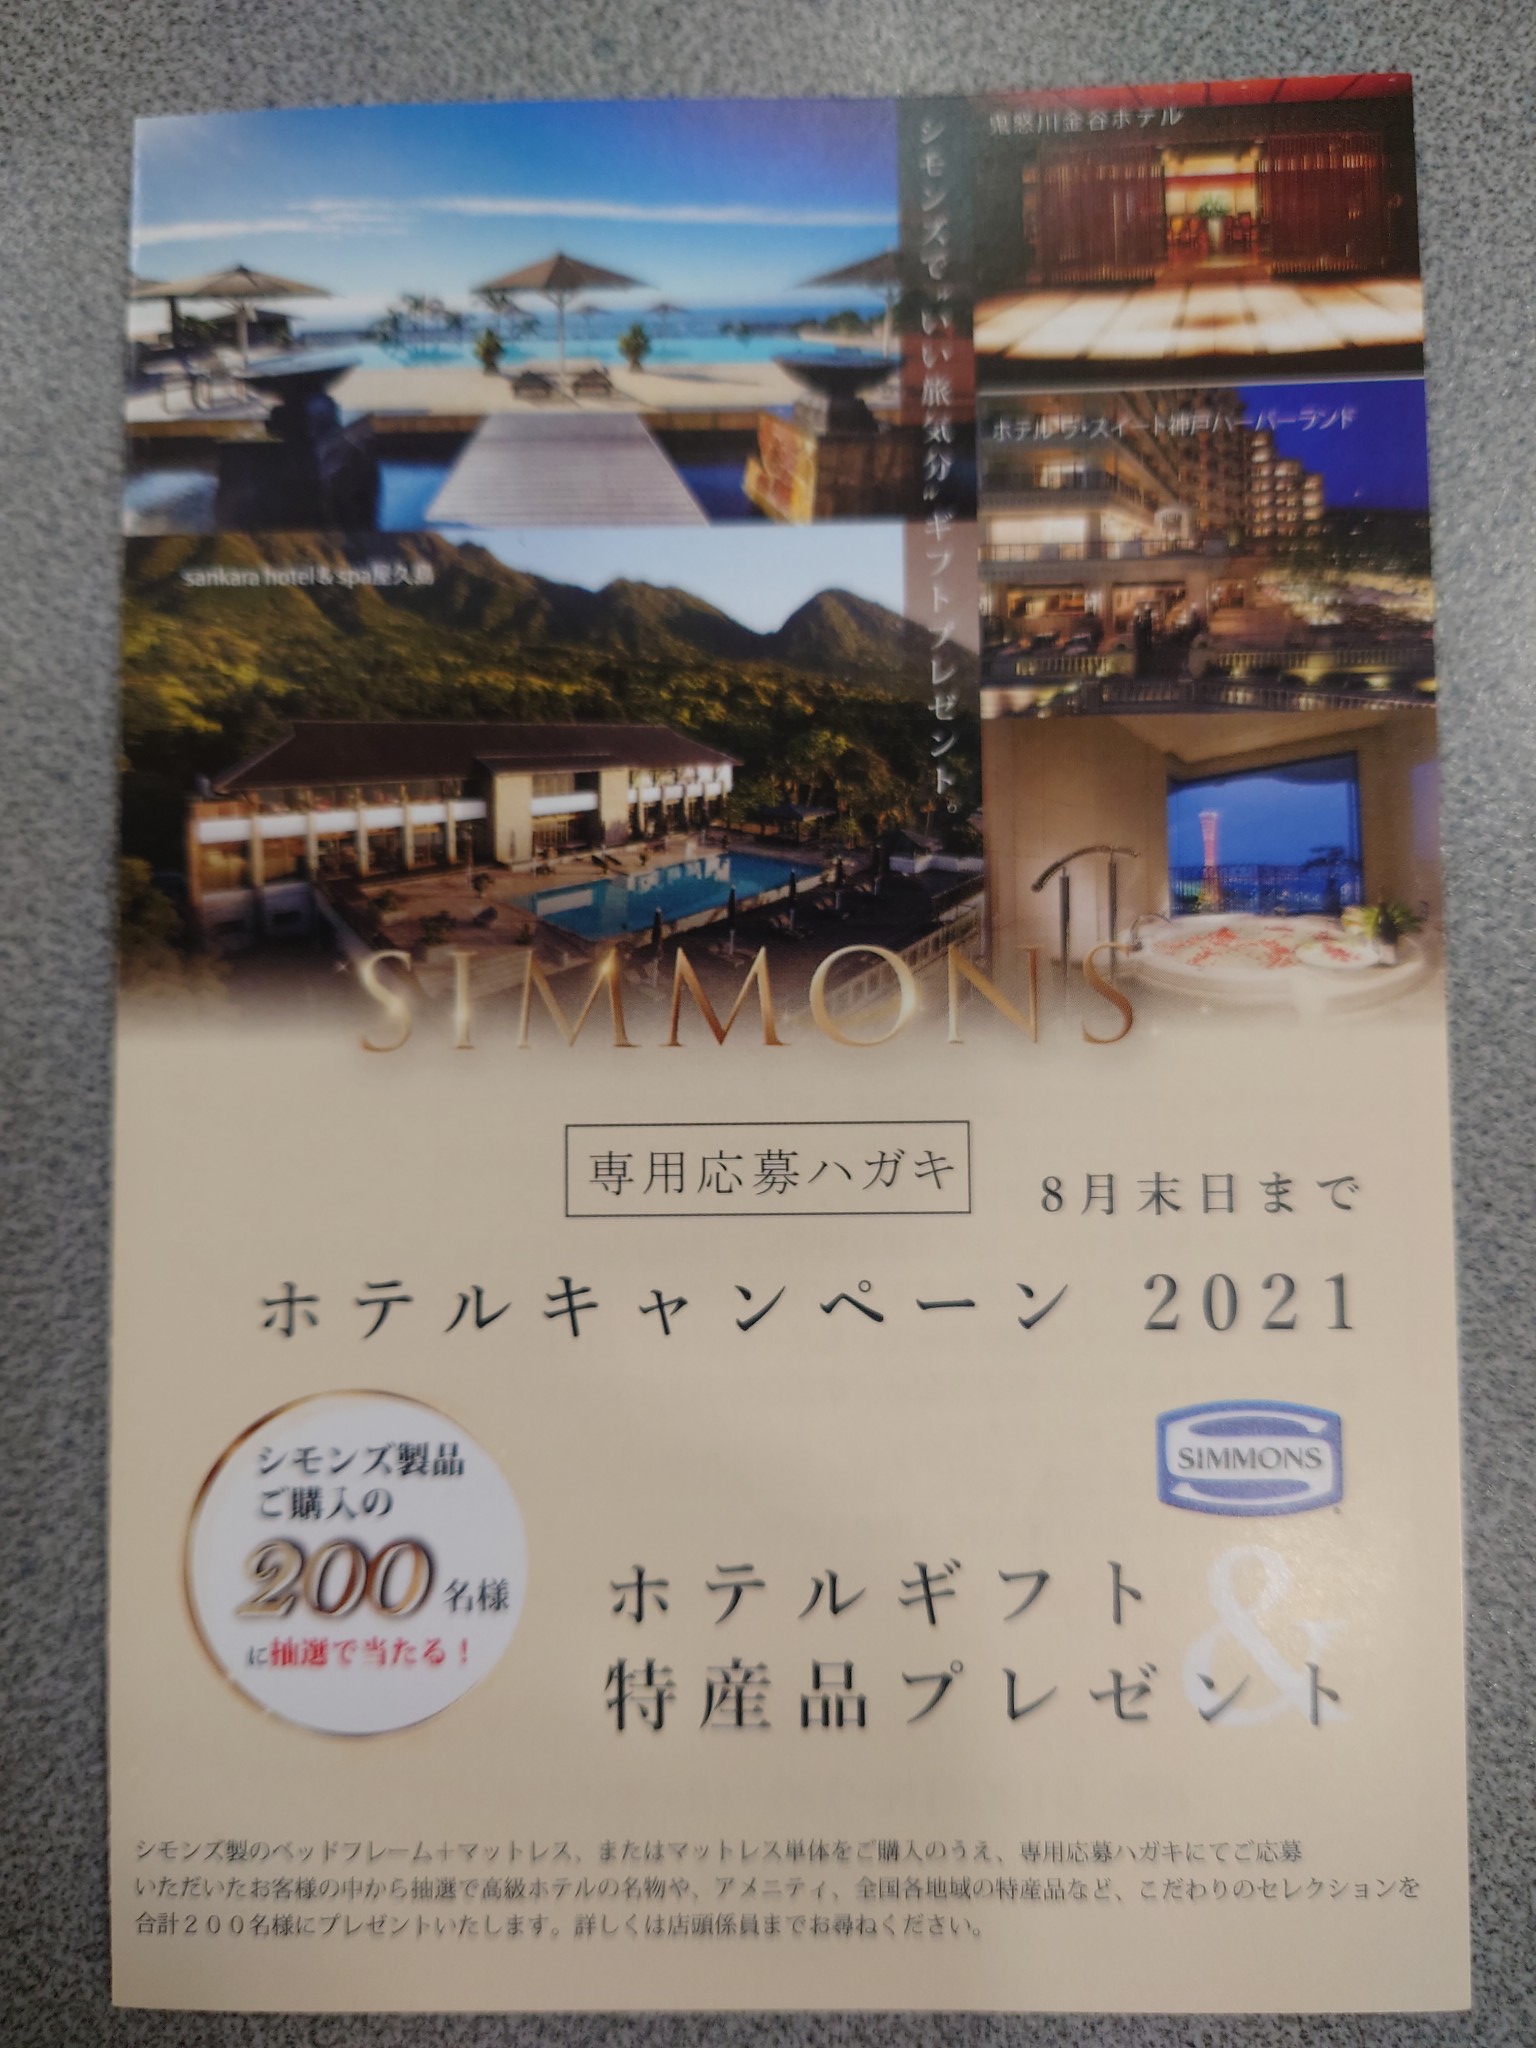 SIMMONS シモンズ製品ご購入でホテルキャンペーン実施中です